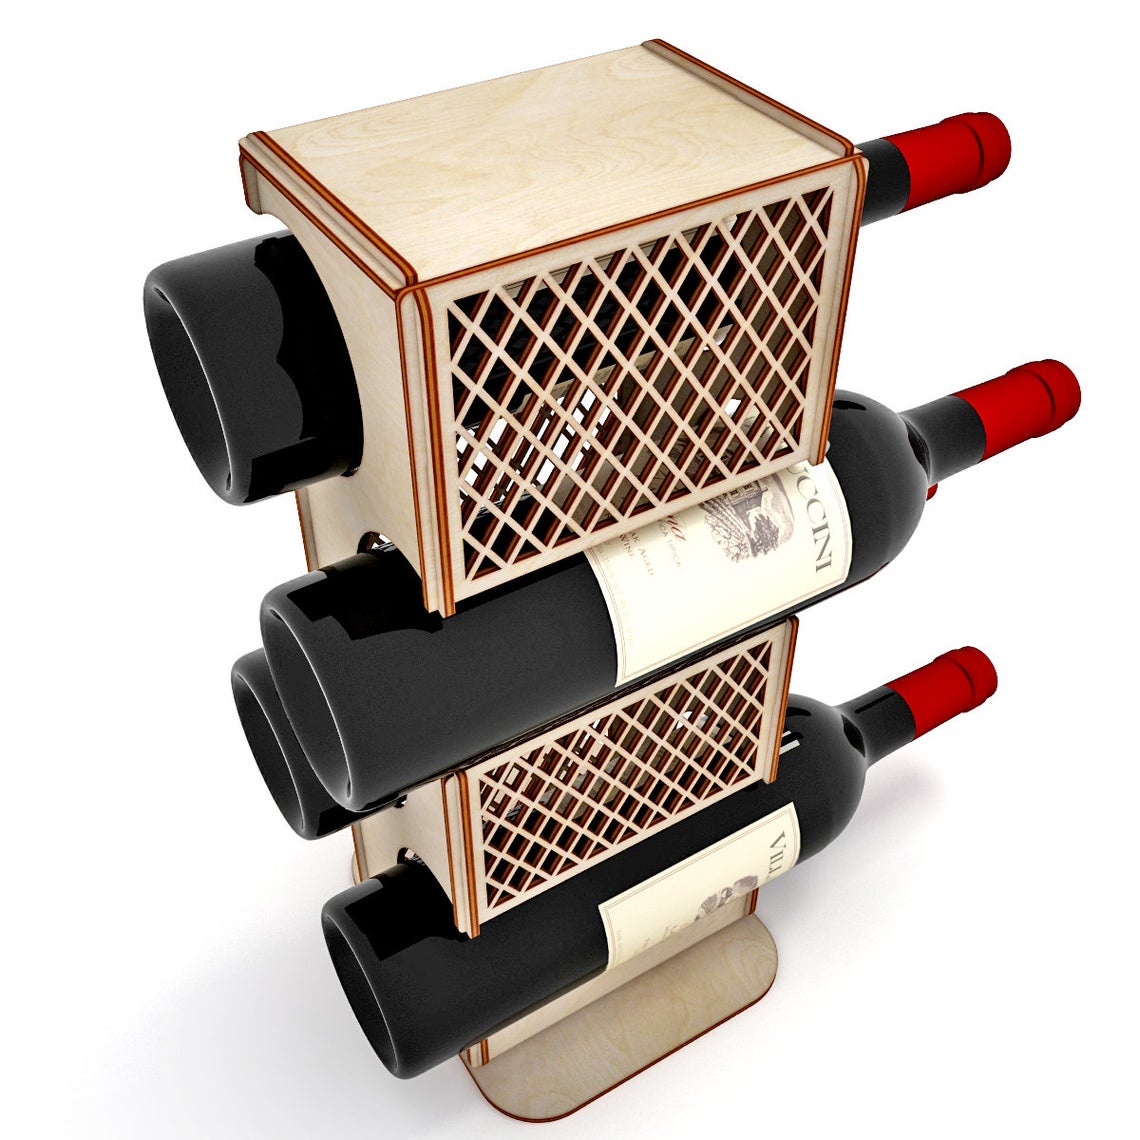 Laser Cut Wooden Wine Rack Wine Holder Wine Bottle Stand Display Stand Free Vector